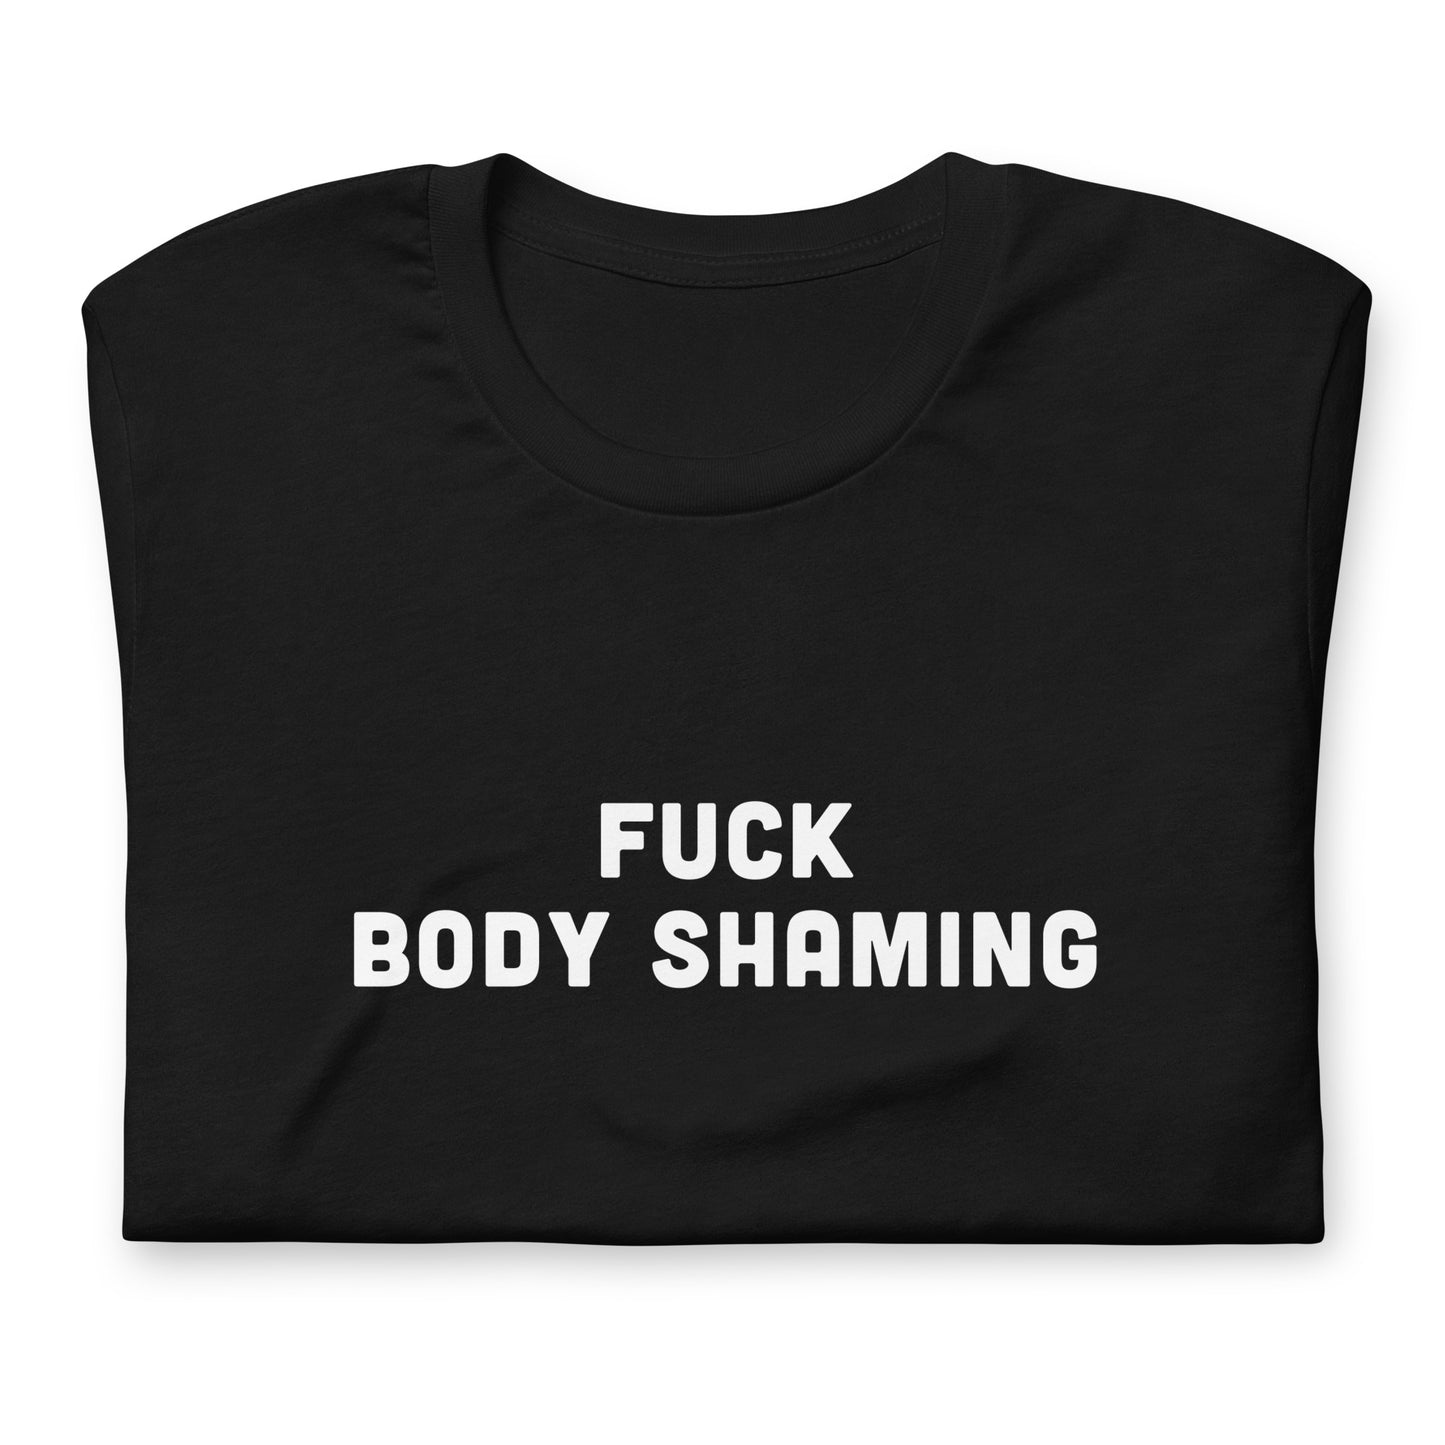 Fuck Body Shaming T-shirt Size M Color Black